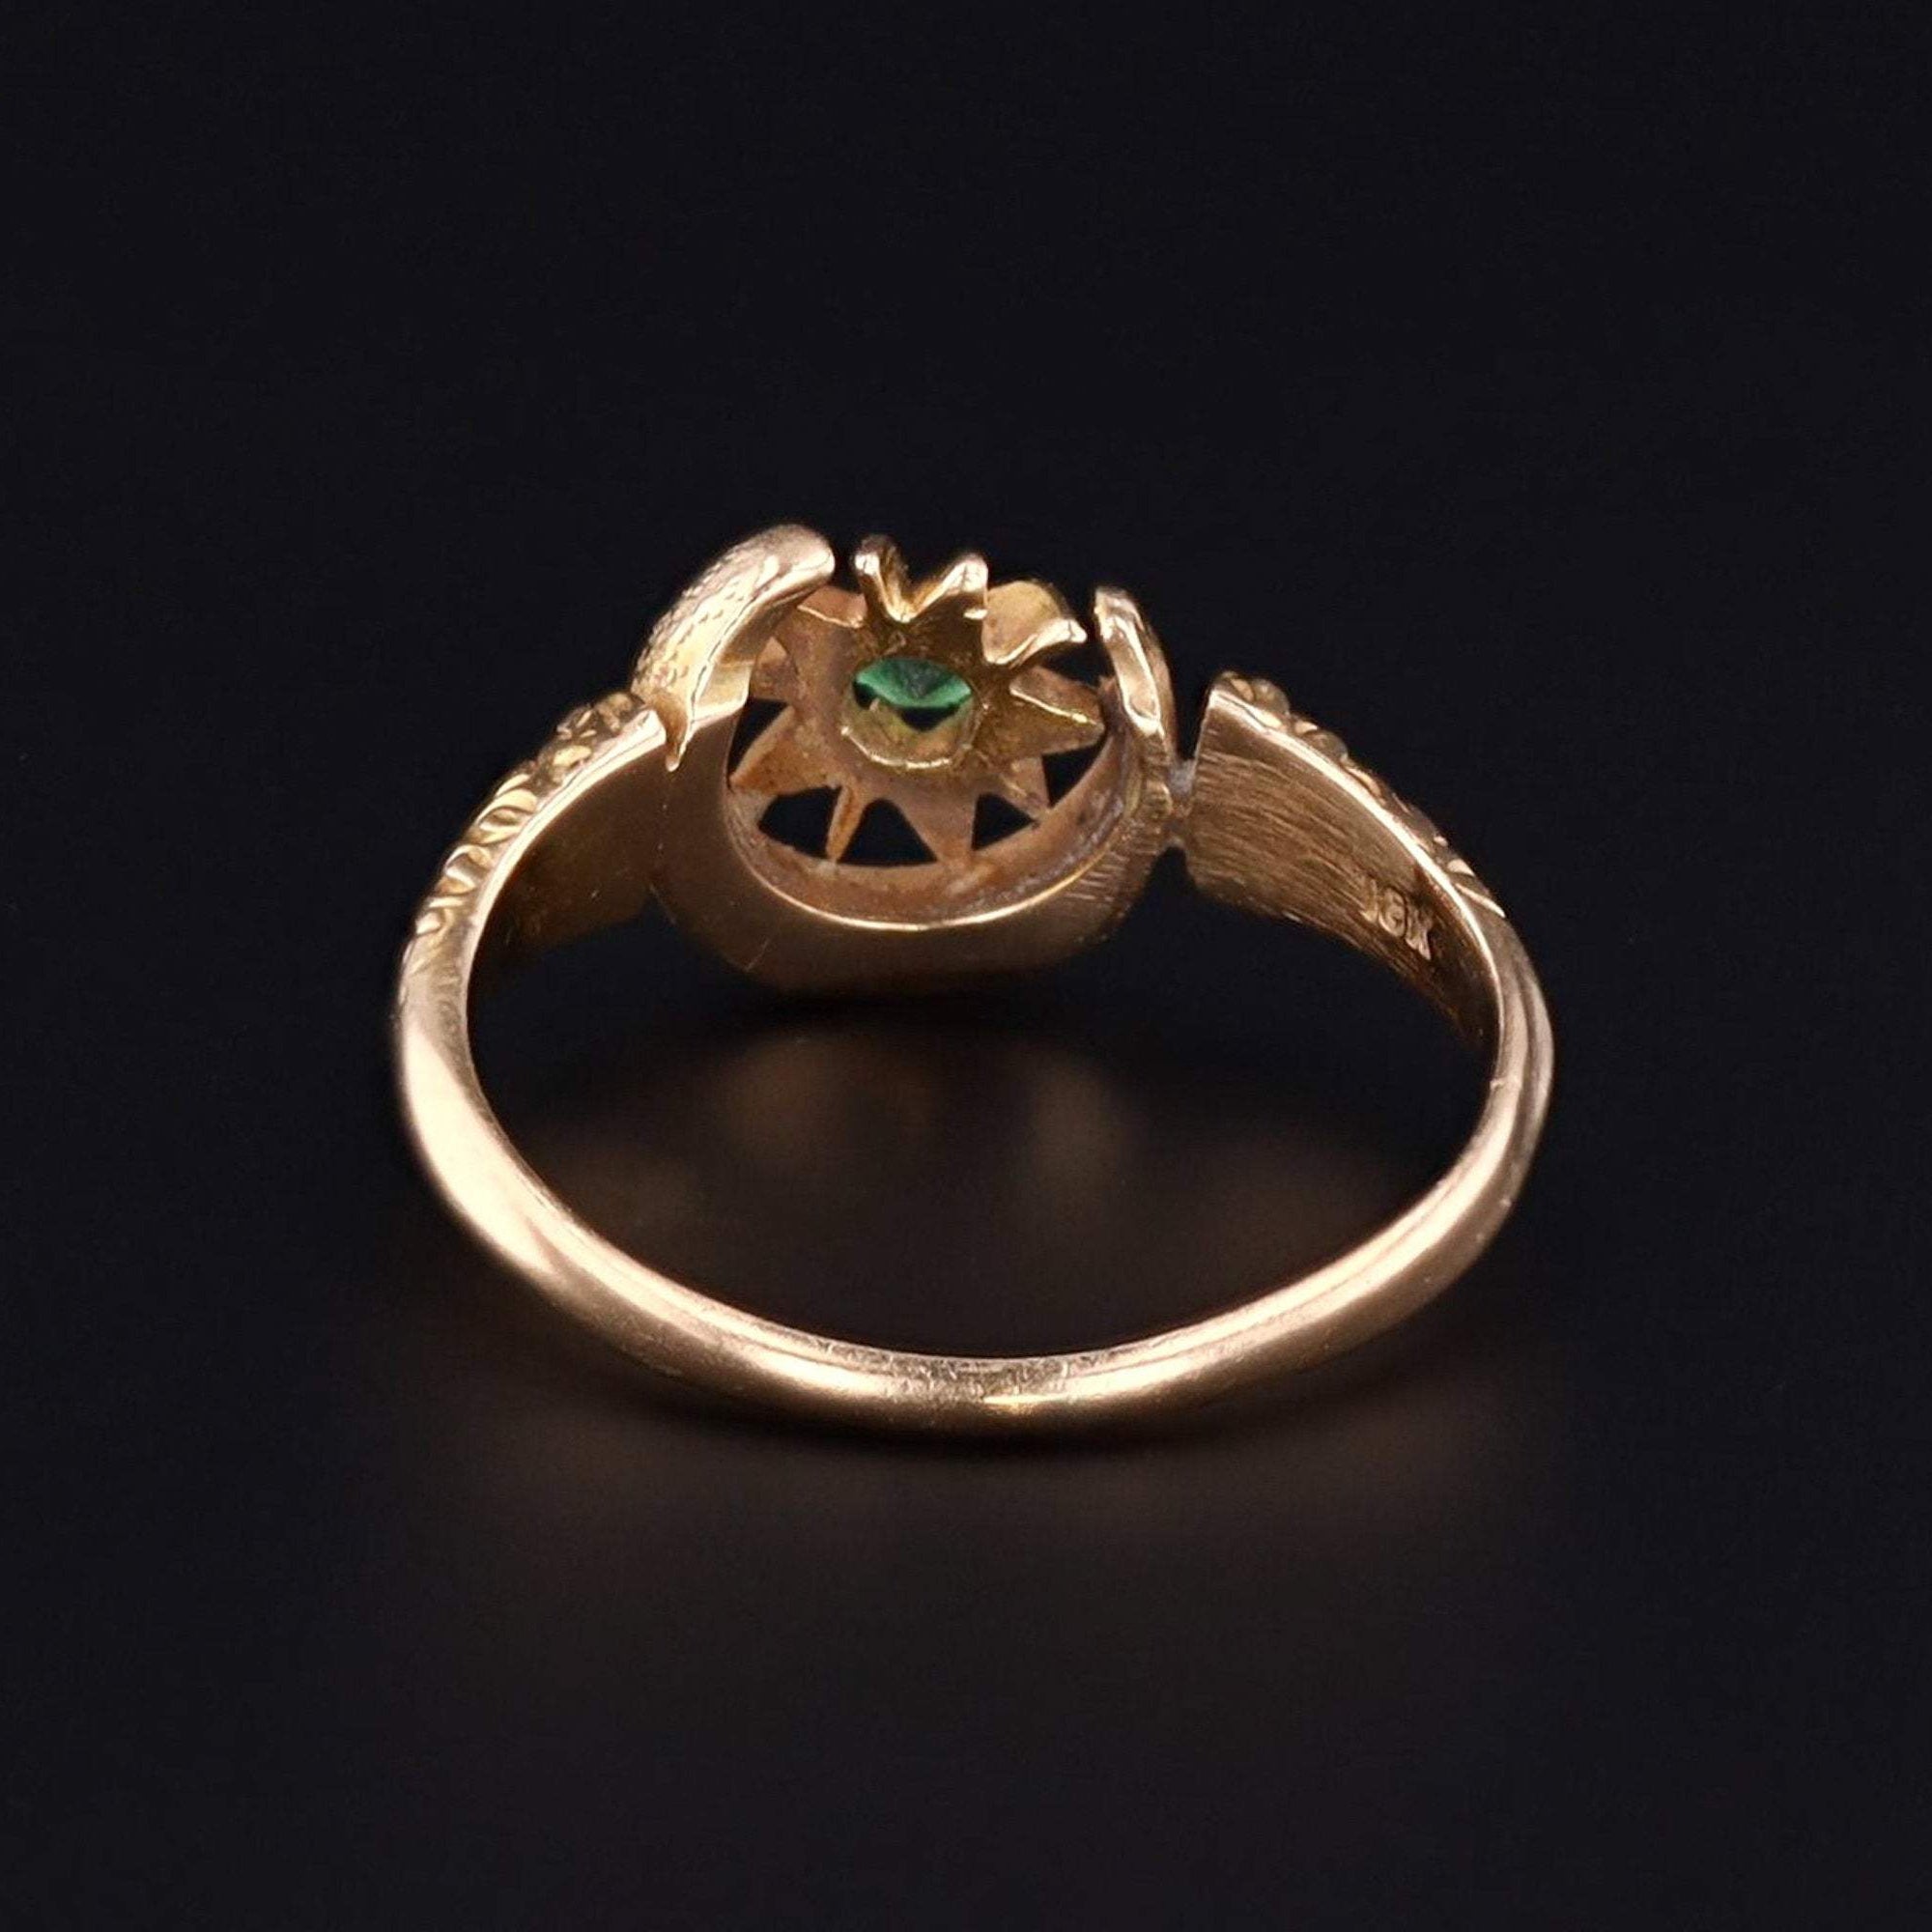 Star Ring (18K gold-plated) – Design Letters EUR